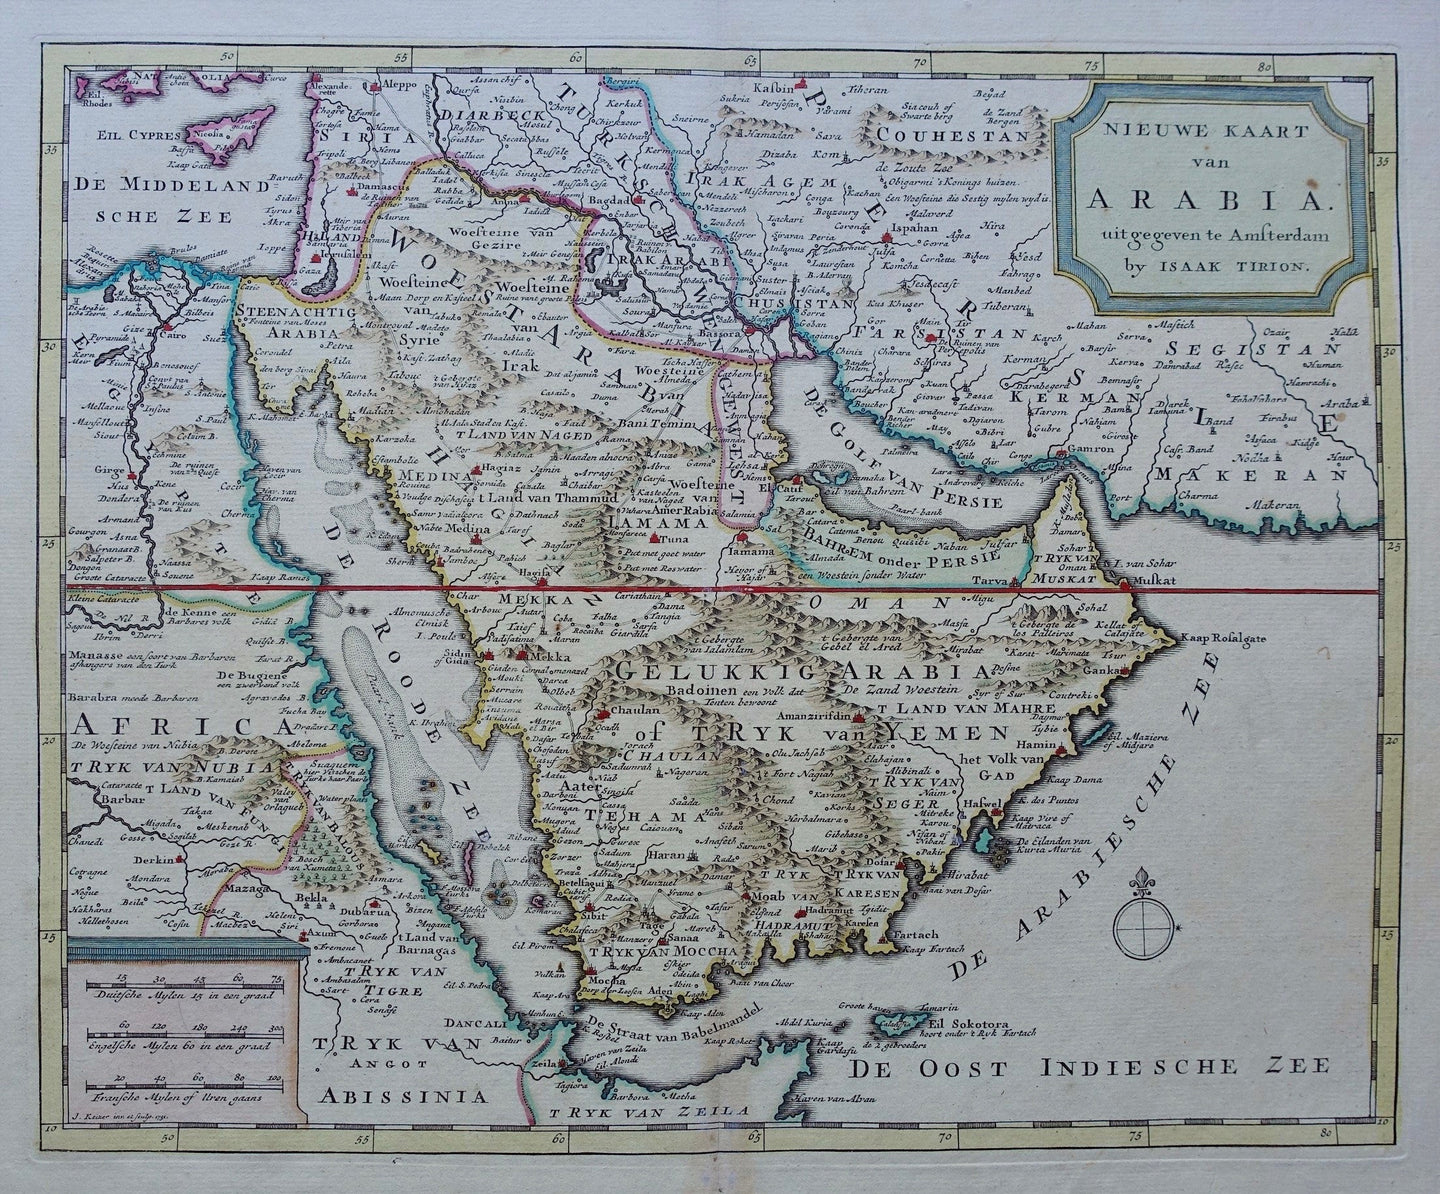 Arabië Arabian Peninsula - I Tirion - 1753